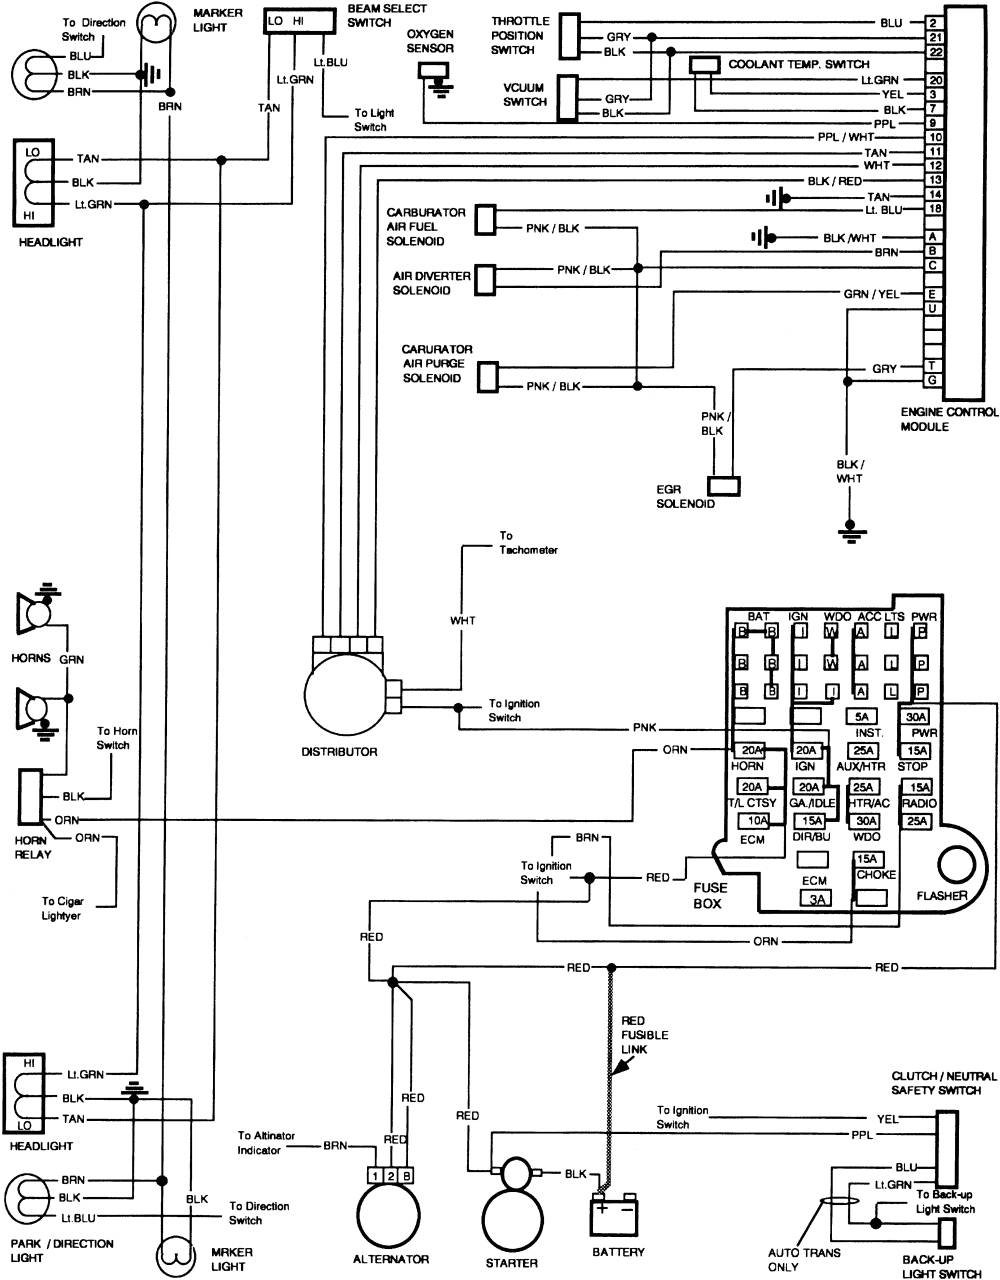 1982 chevy truck wiring harness wiring diagram description 1982 chevy truck engine wiring harness 1982 chevy truck wiring harness